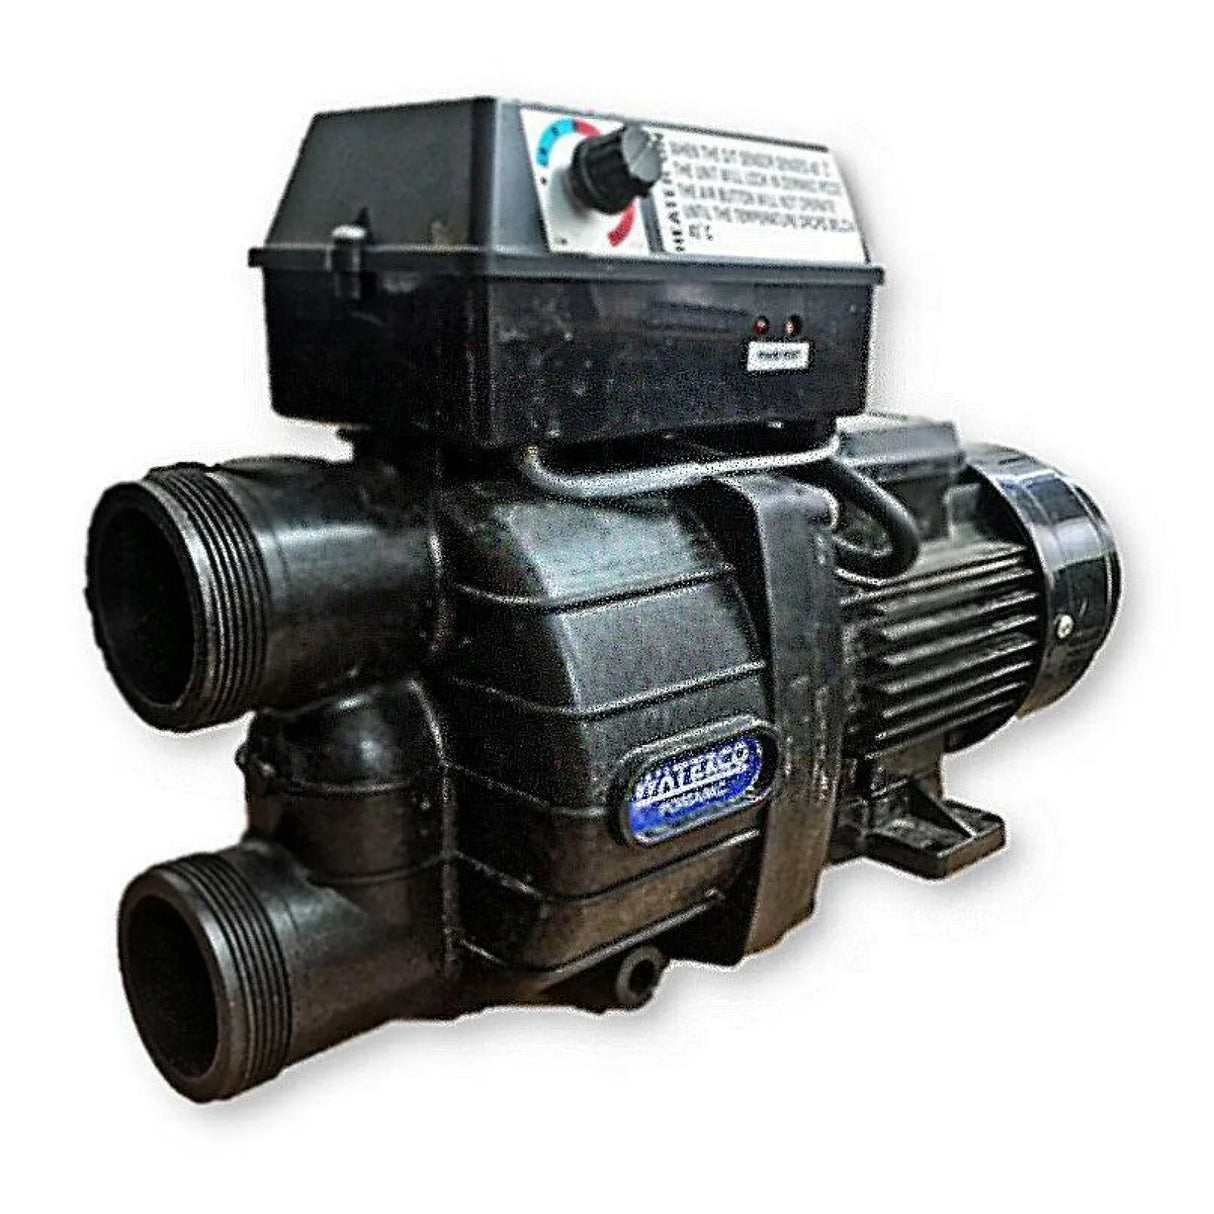 Waterco Portapac Mk 1 / Mk 2 / Mk 3 - Heater and Spa Parts